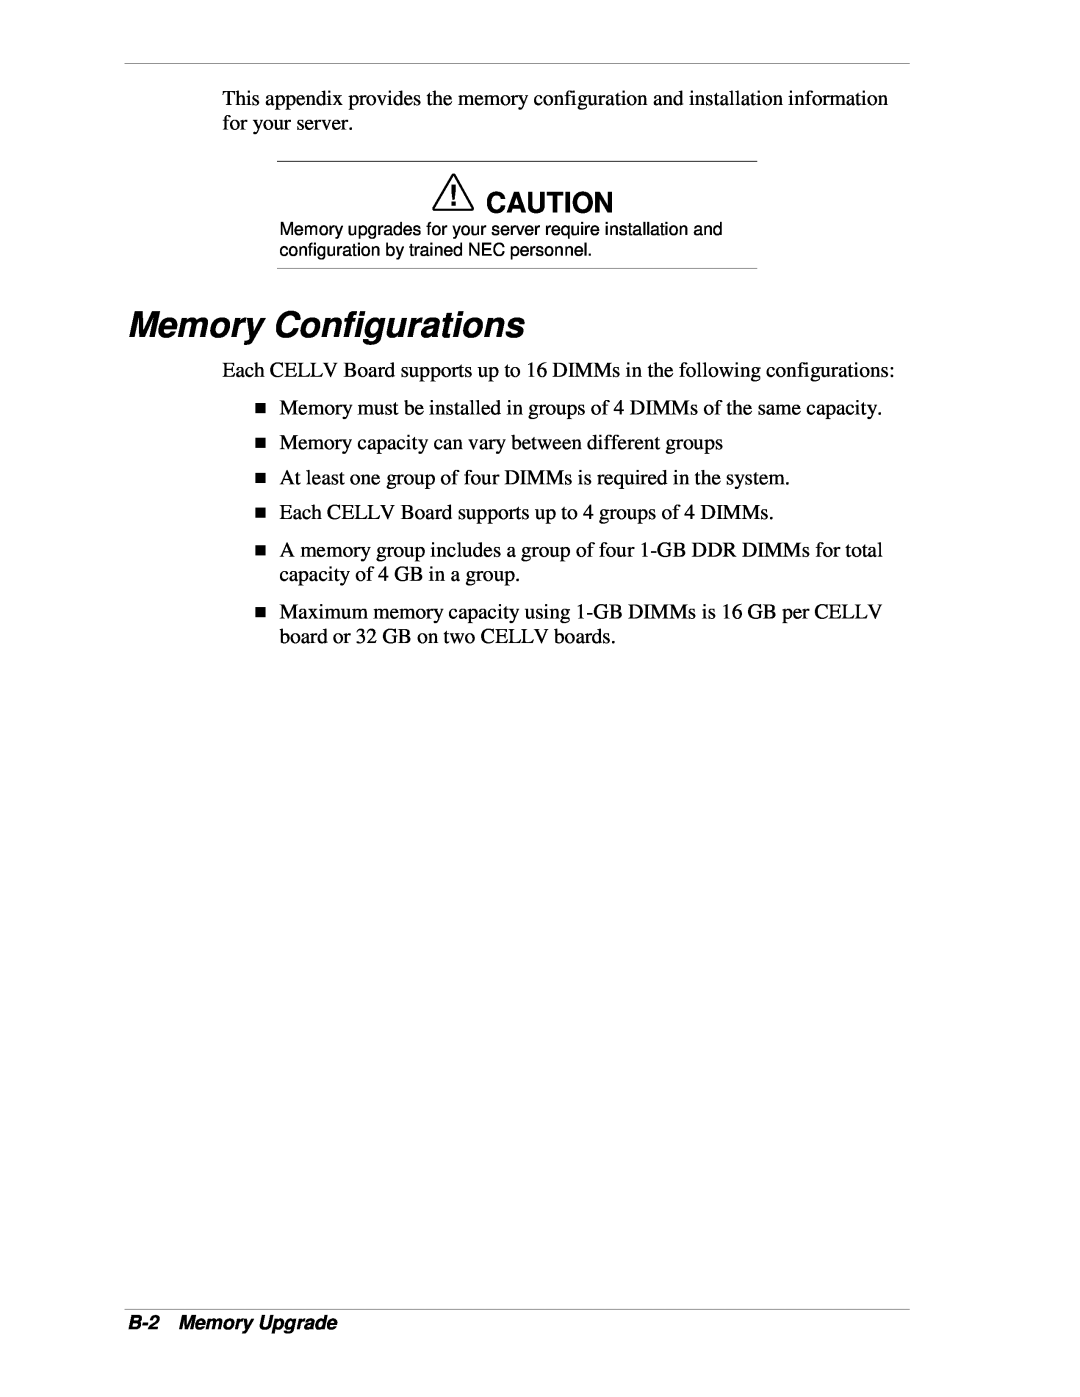 NEC 1080Xd manual Memory Configurations, B-2 Memory Upgrade 